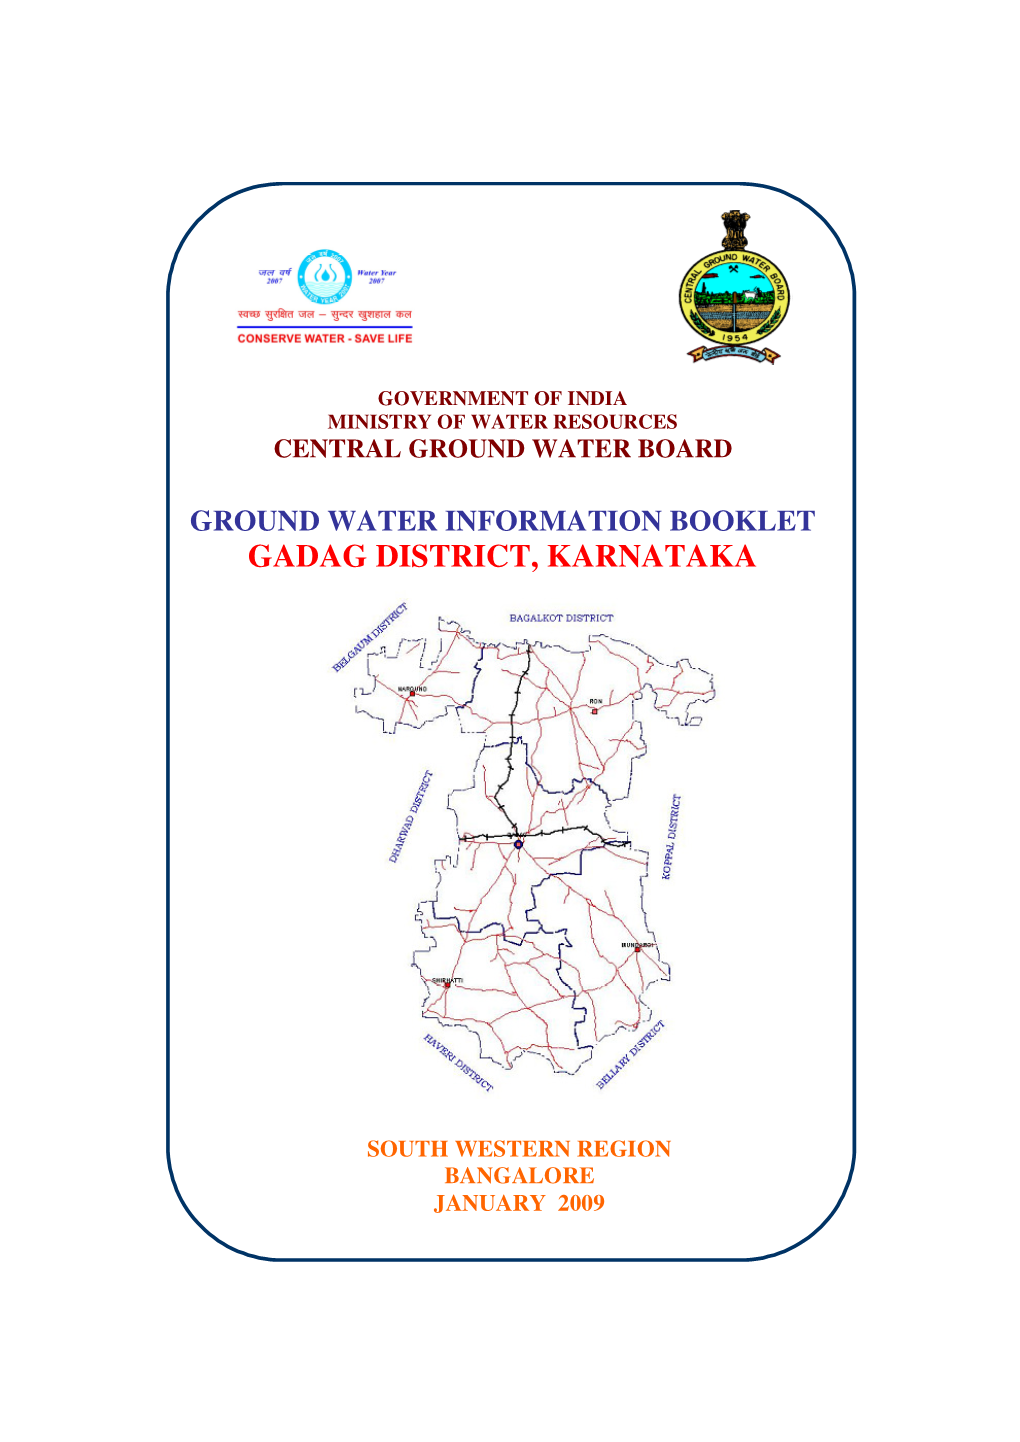 Gadag District, Karnataka